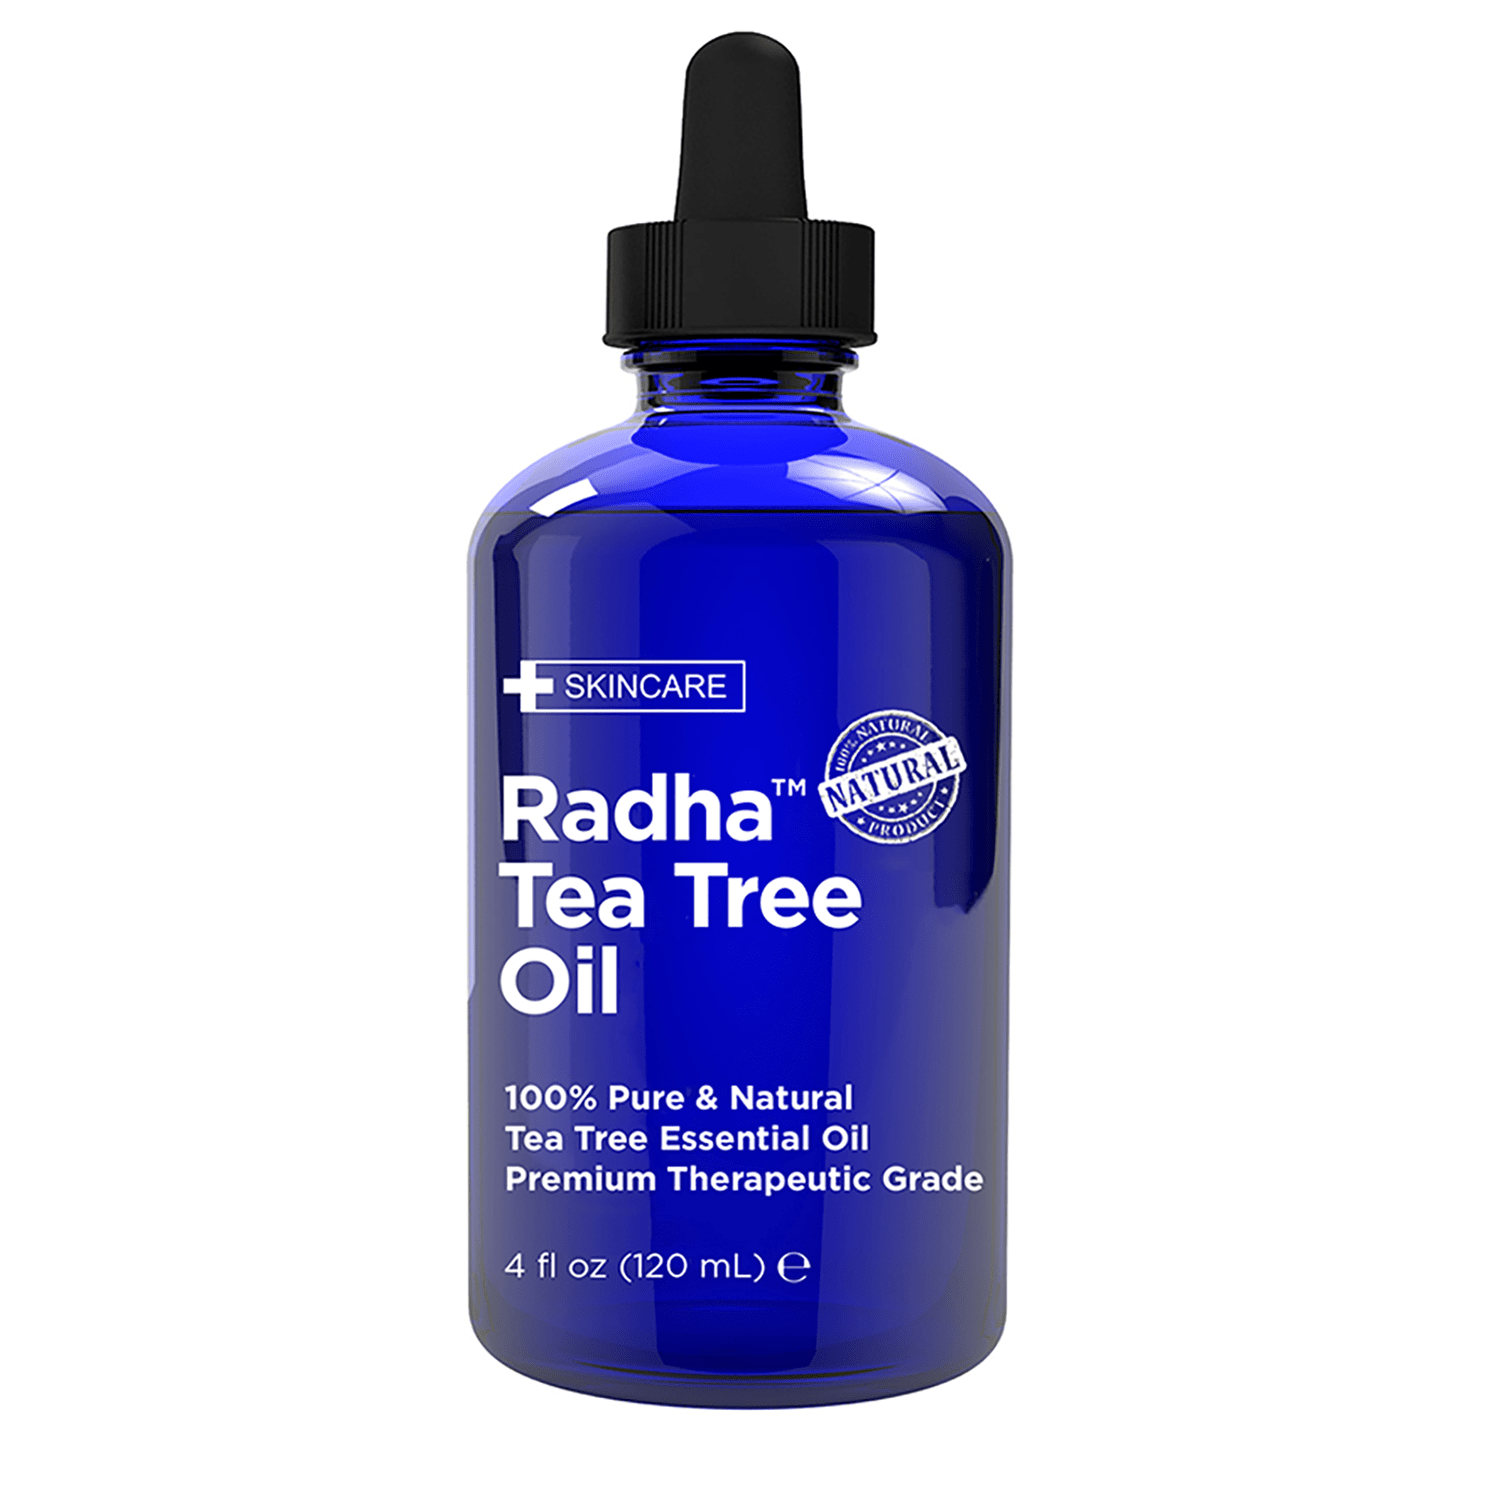 100% Pure Tea Tree Essential Oil - Radha Beauty